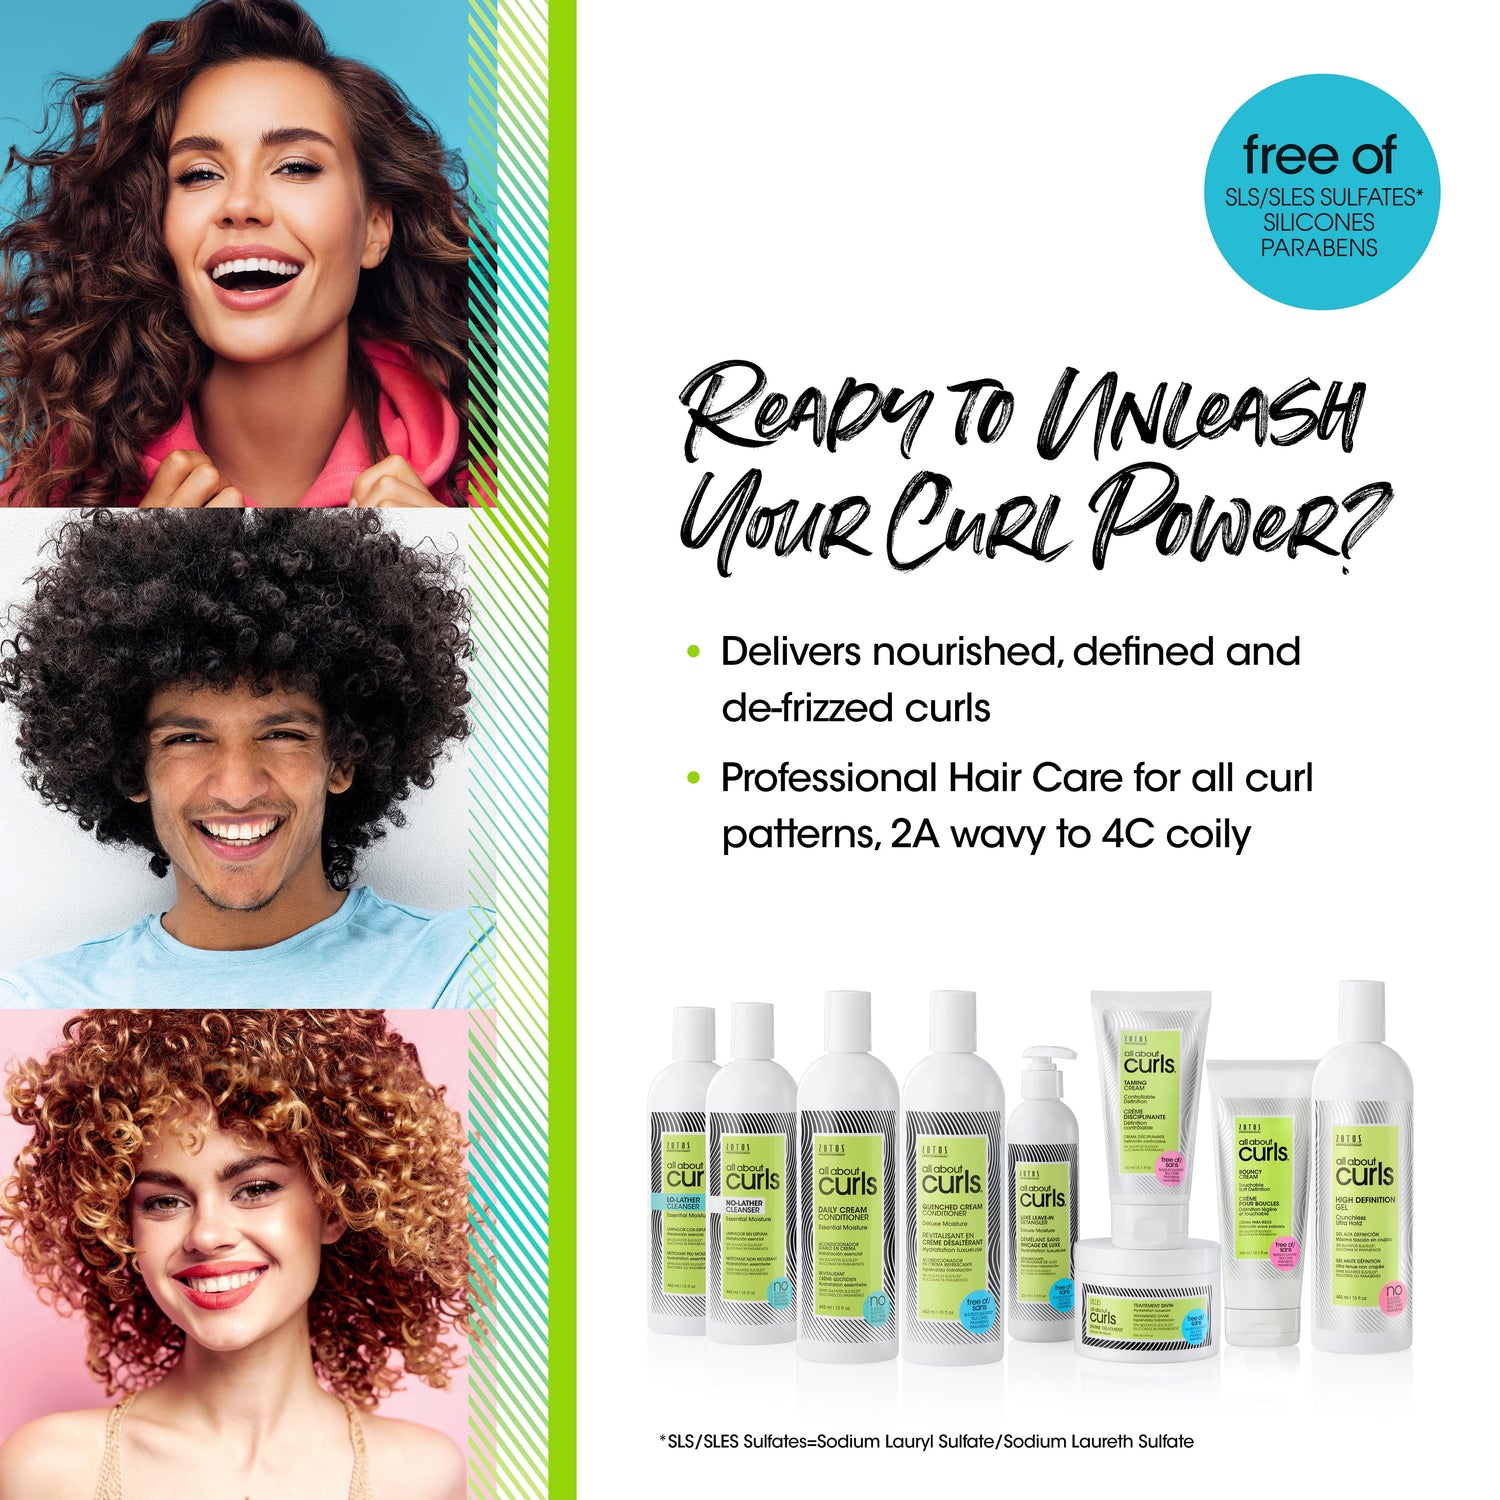 All About Curls® Brilliant Moisture Hair & Scalp Spray Oil